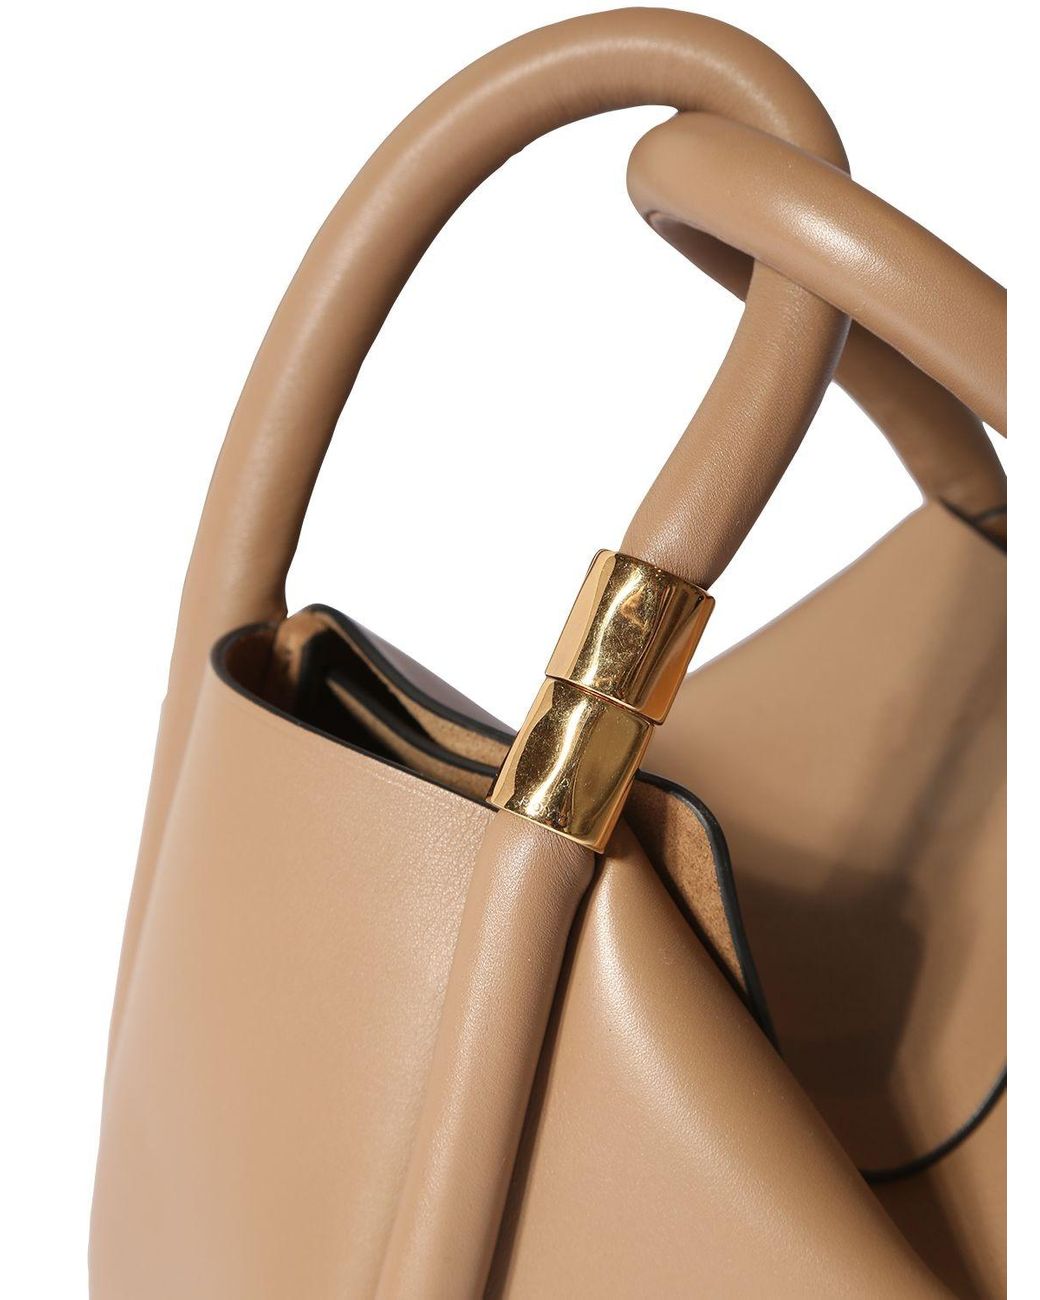 Boyy Wonton 20 Leather Top Handle Bag | Lyst